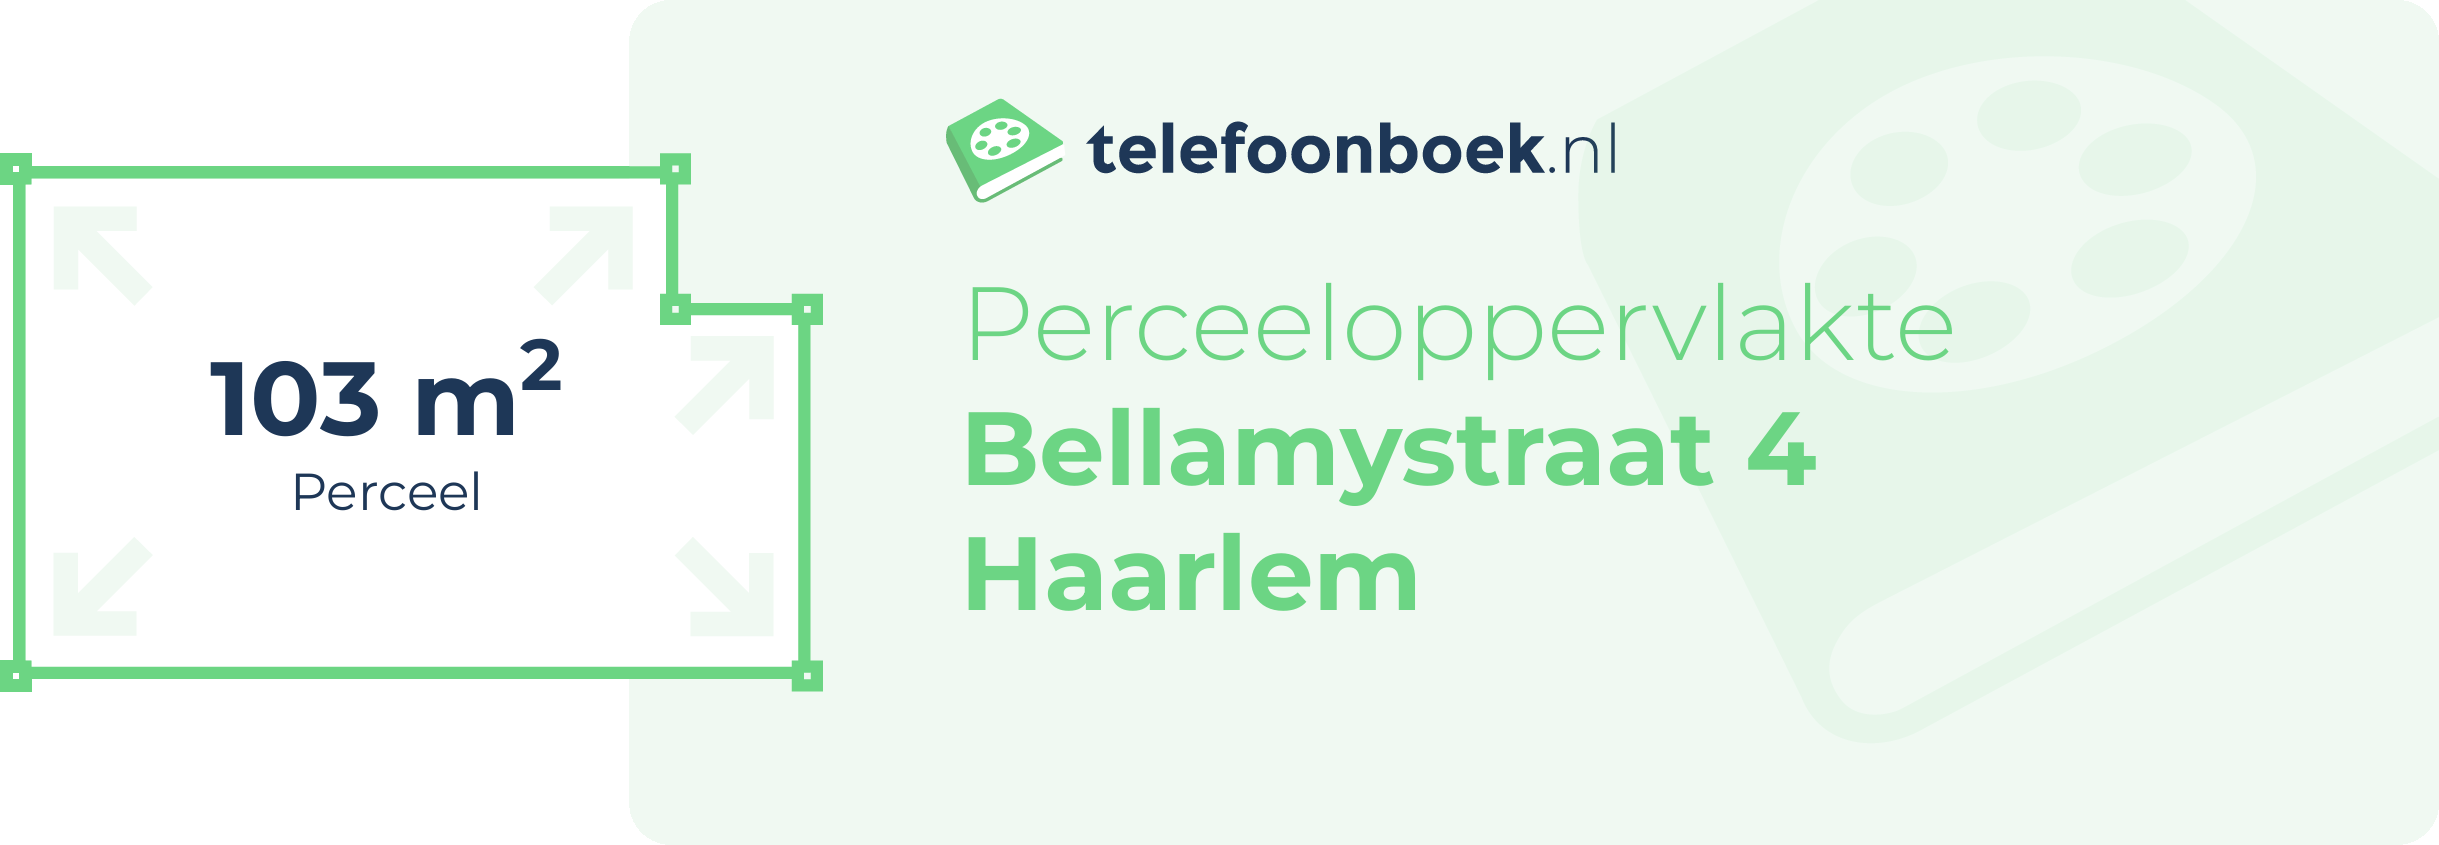 Perceeloppervlakte Bellamystraat 4 Haarlem